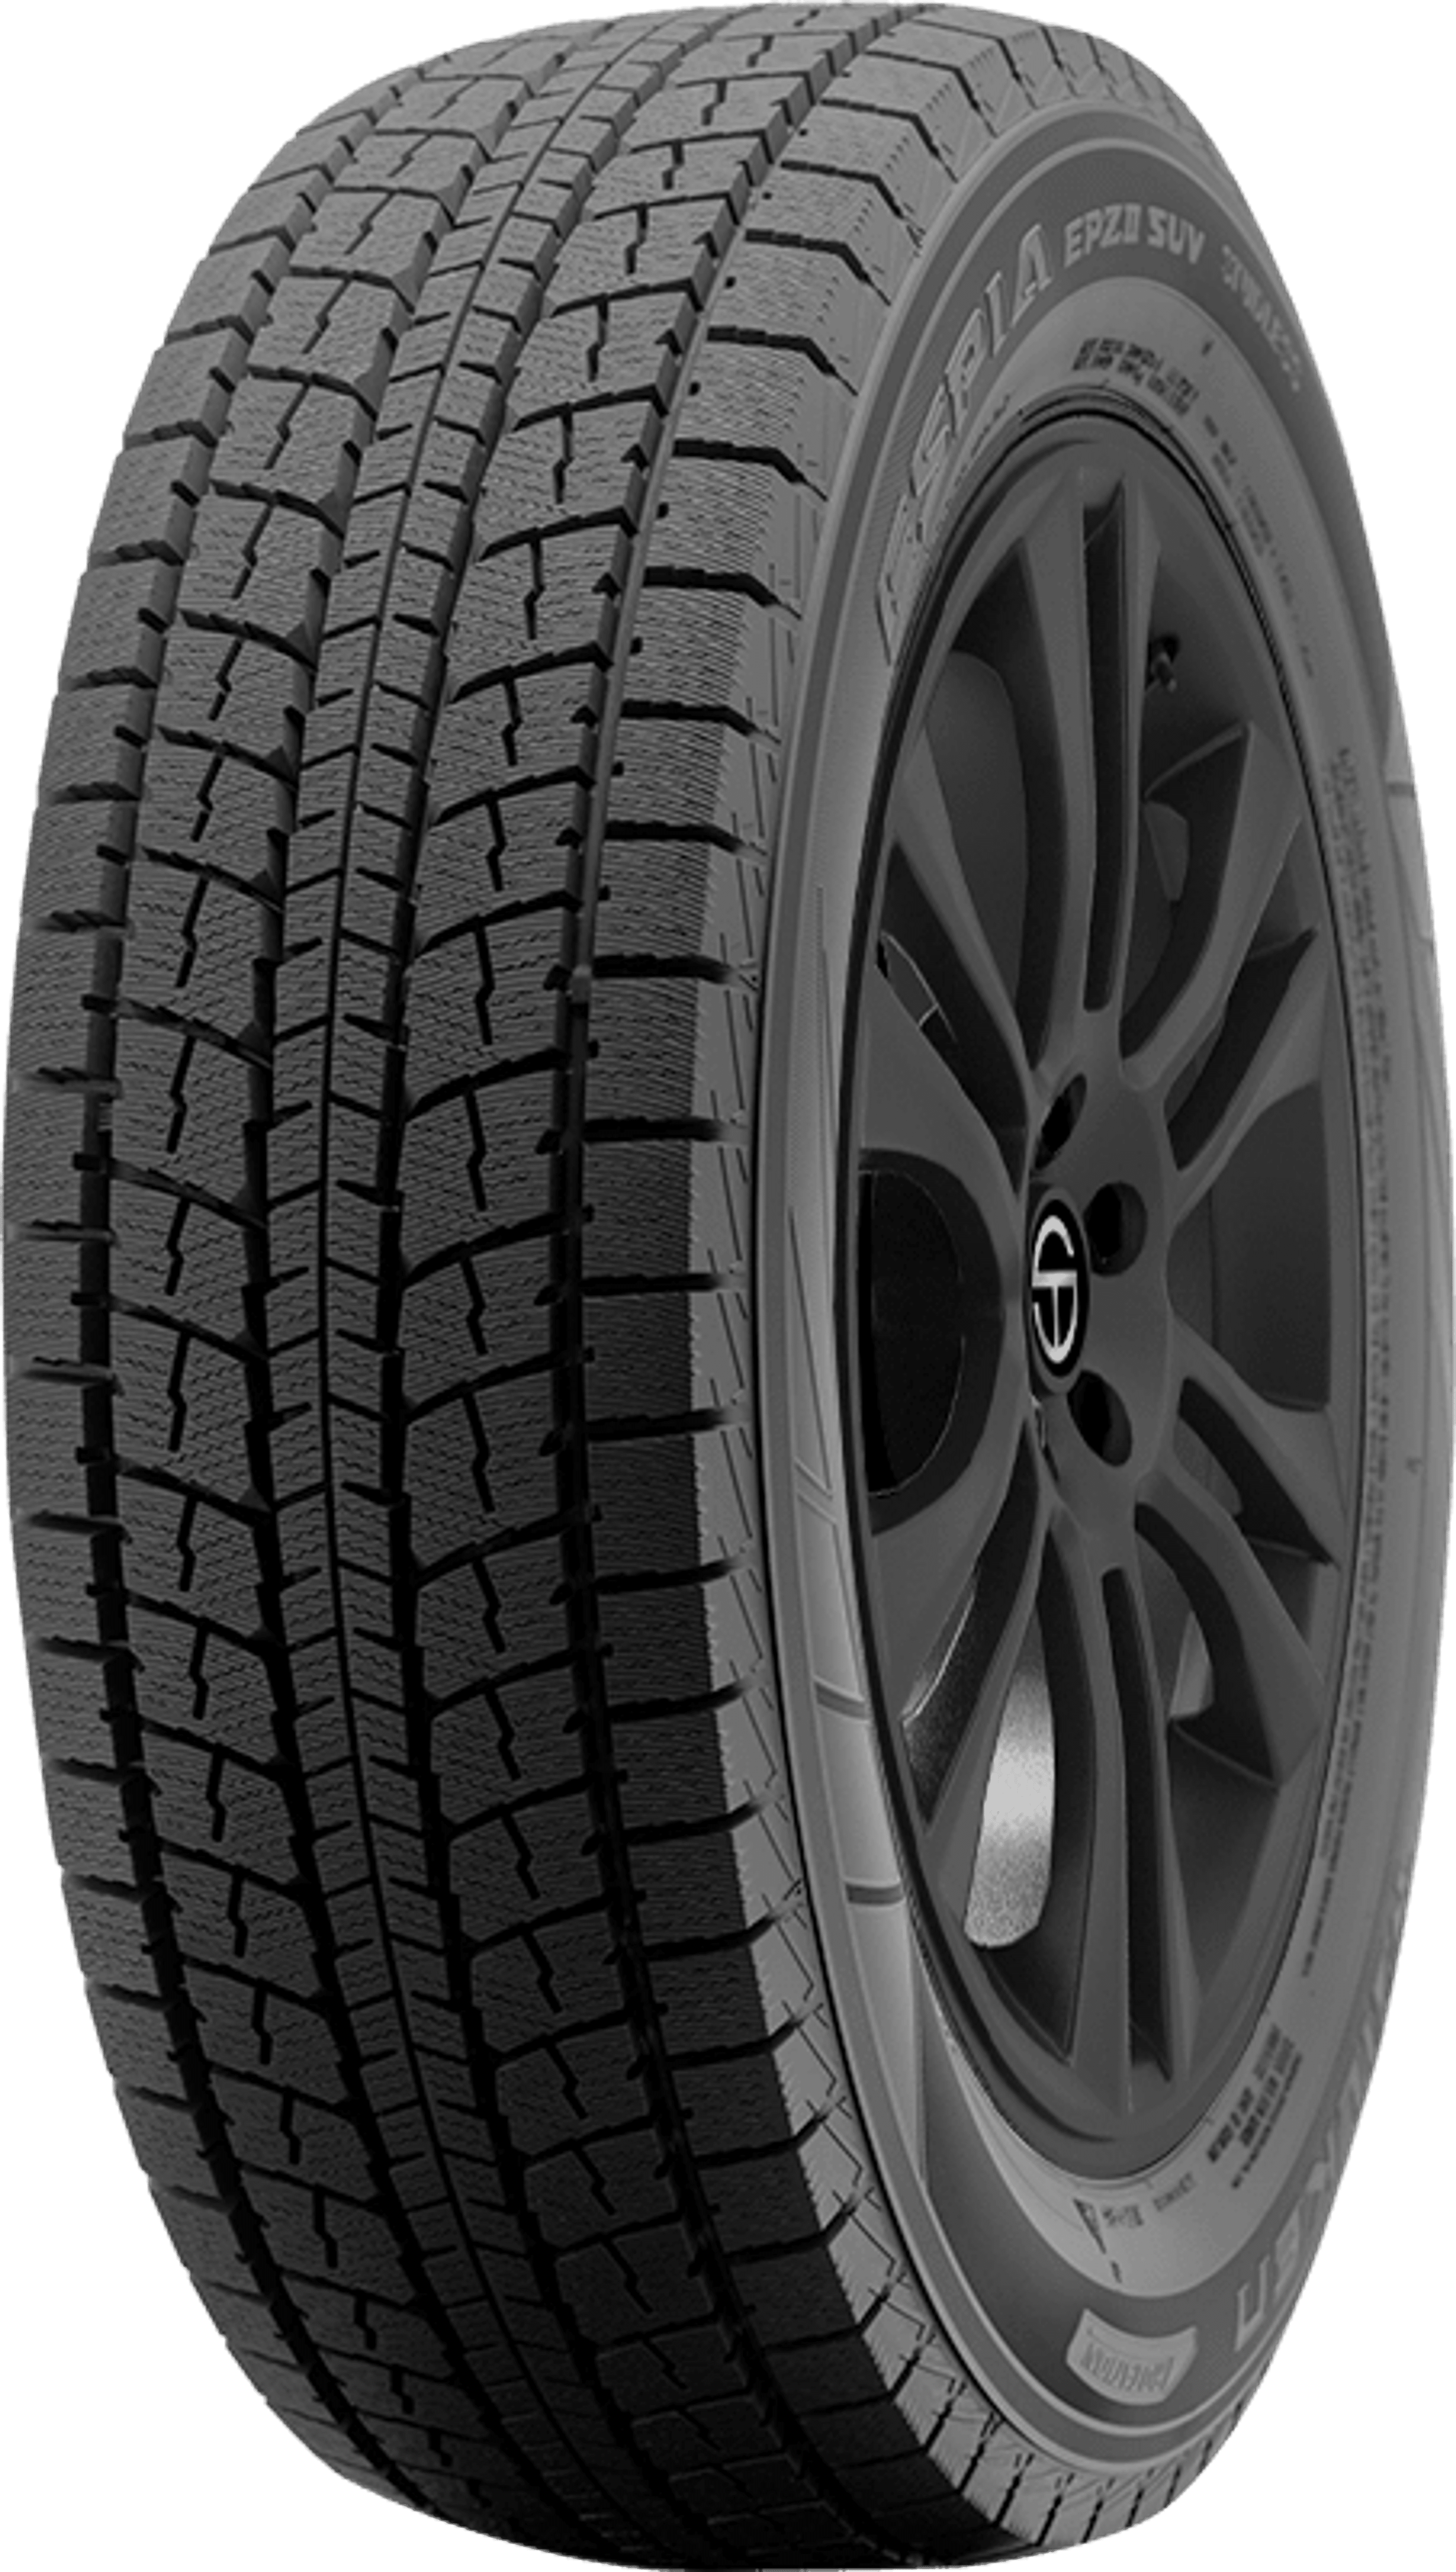 Buy Falken Espia Online Tires EPZ | SUV SimpleTire II